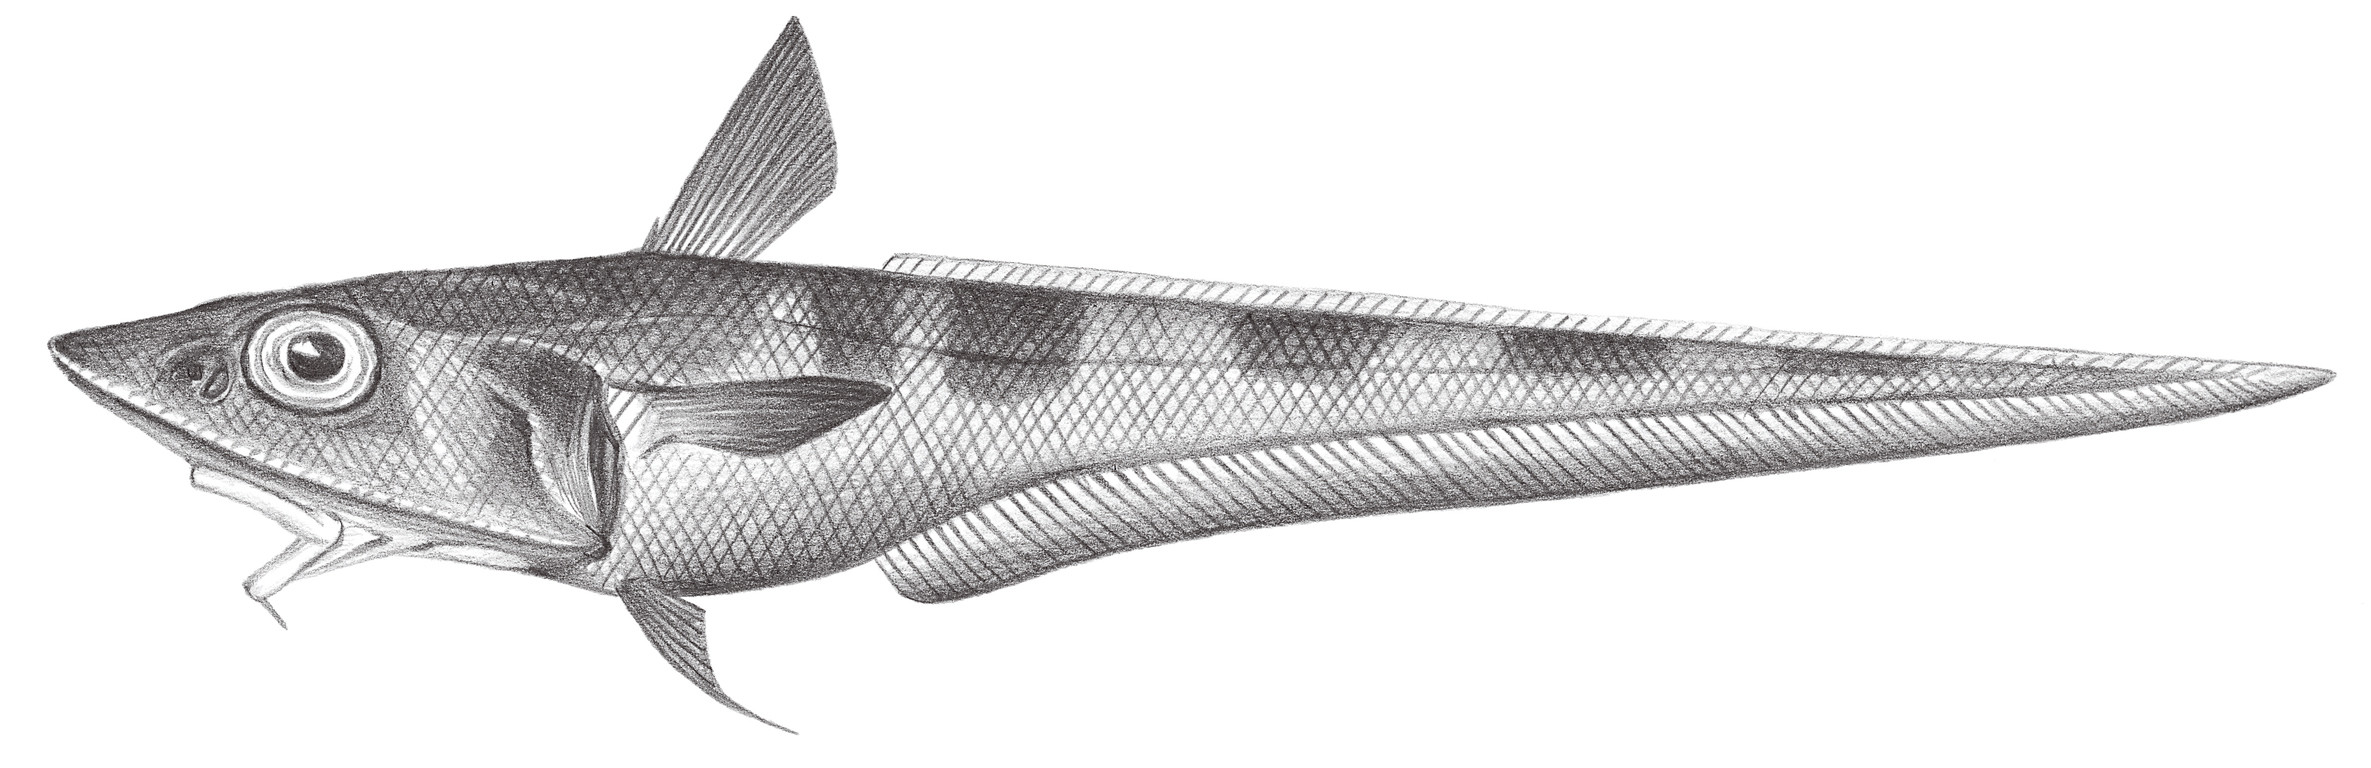 558.	六帶腔吻鱈 Caelorinchus hexafasciatus Okamura, 1982